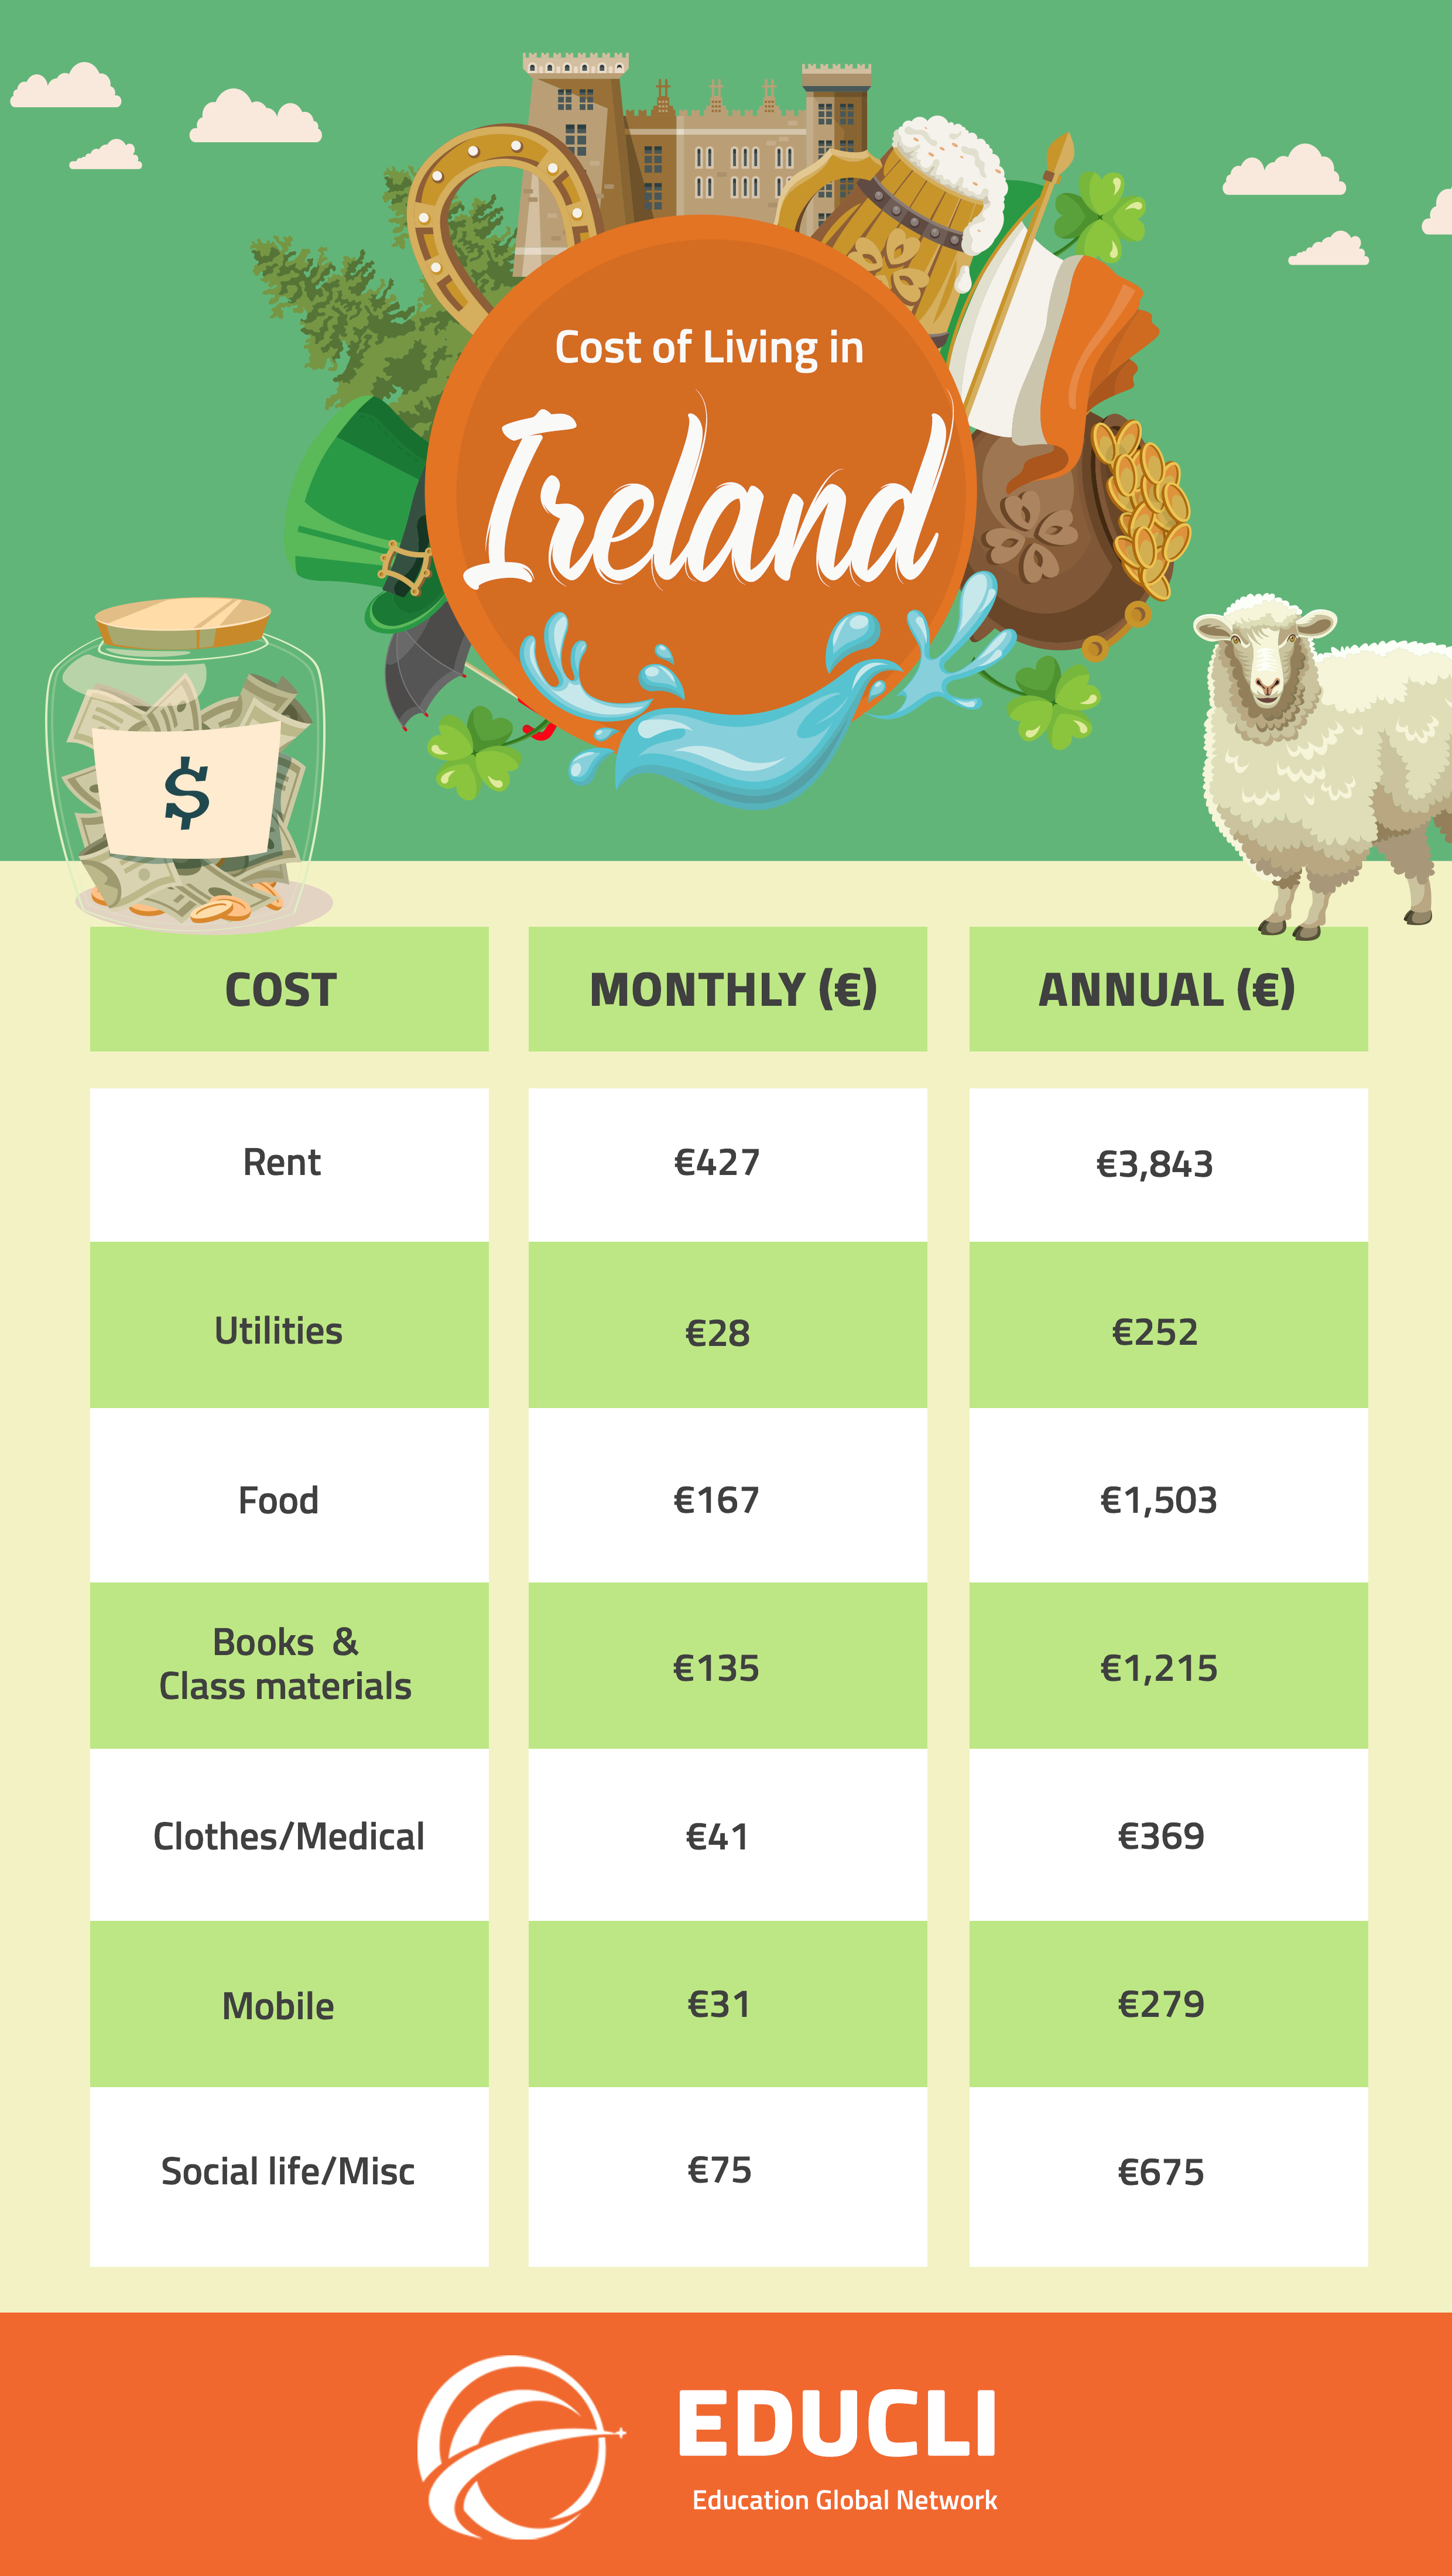 IRELAND - COST OF LIVING